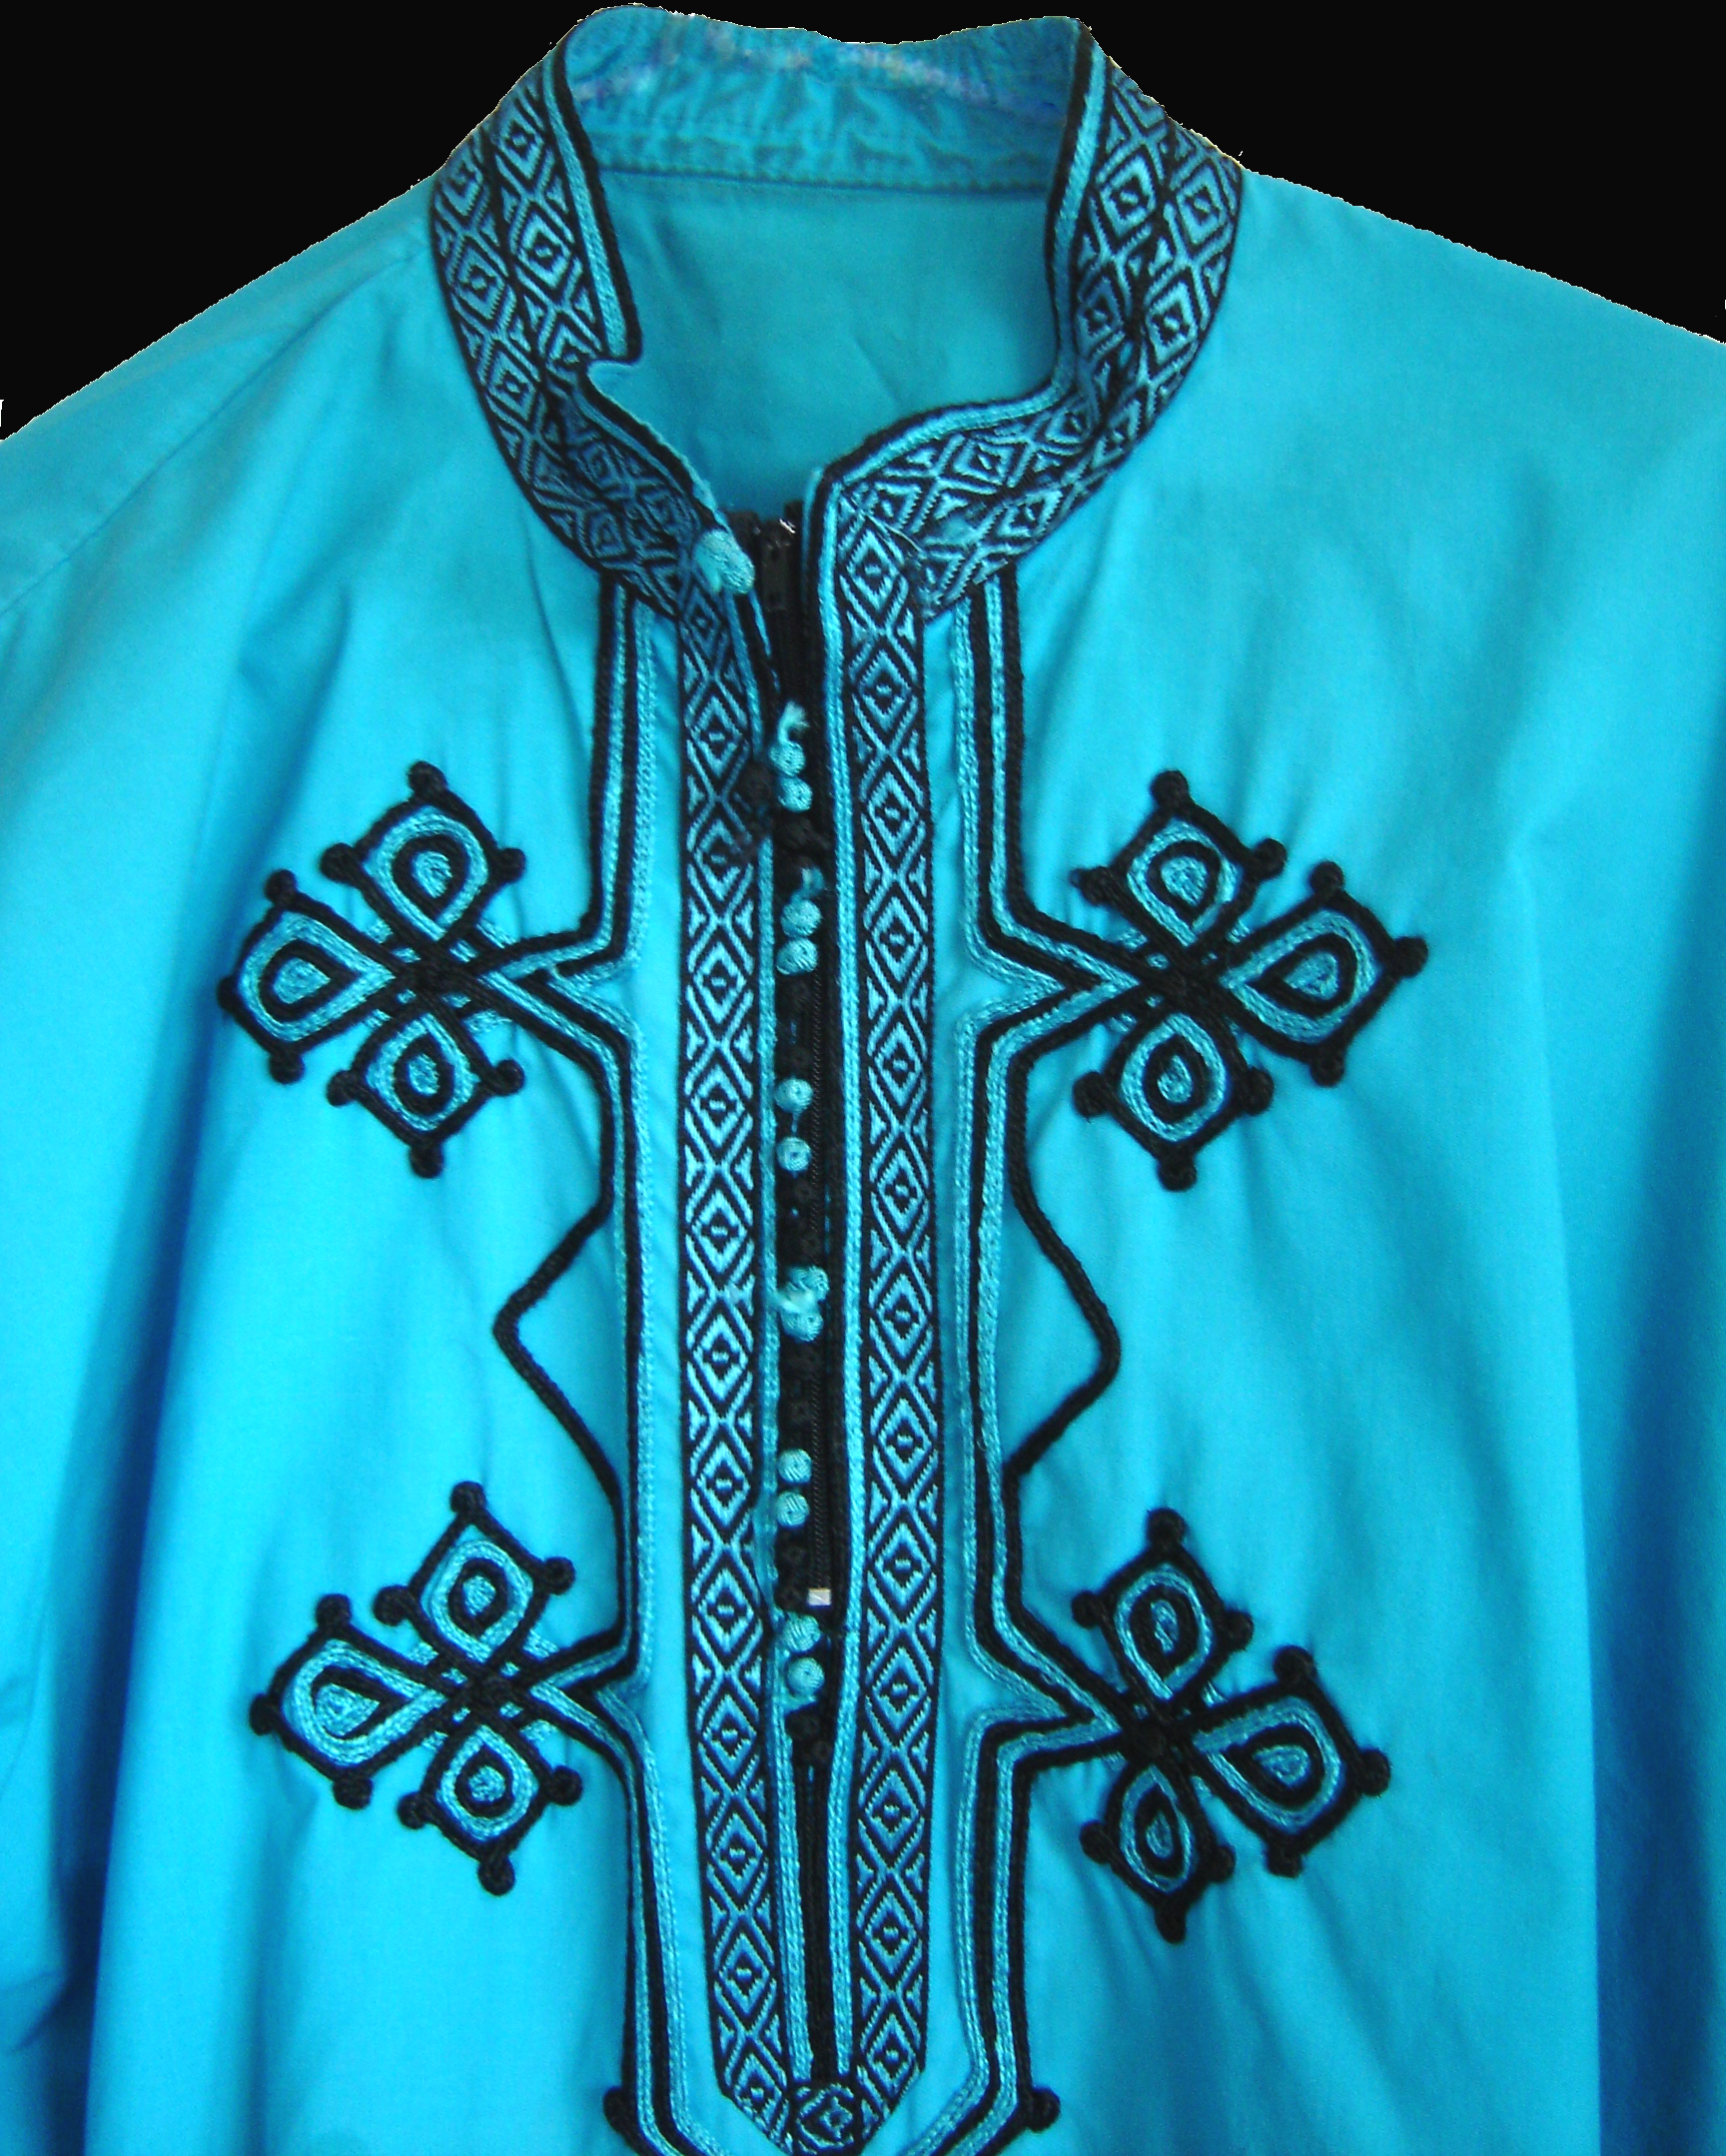 Turquoise Moroccan shirt